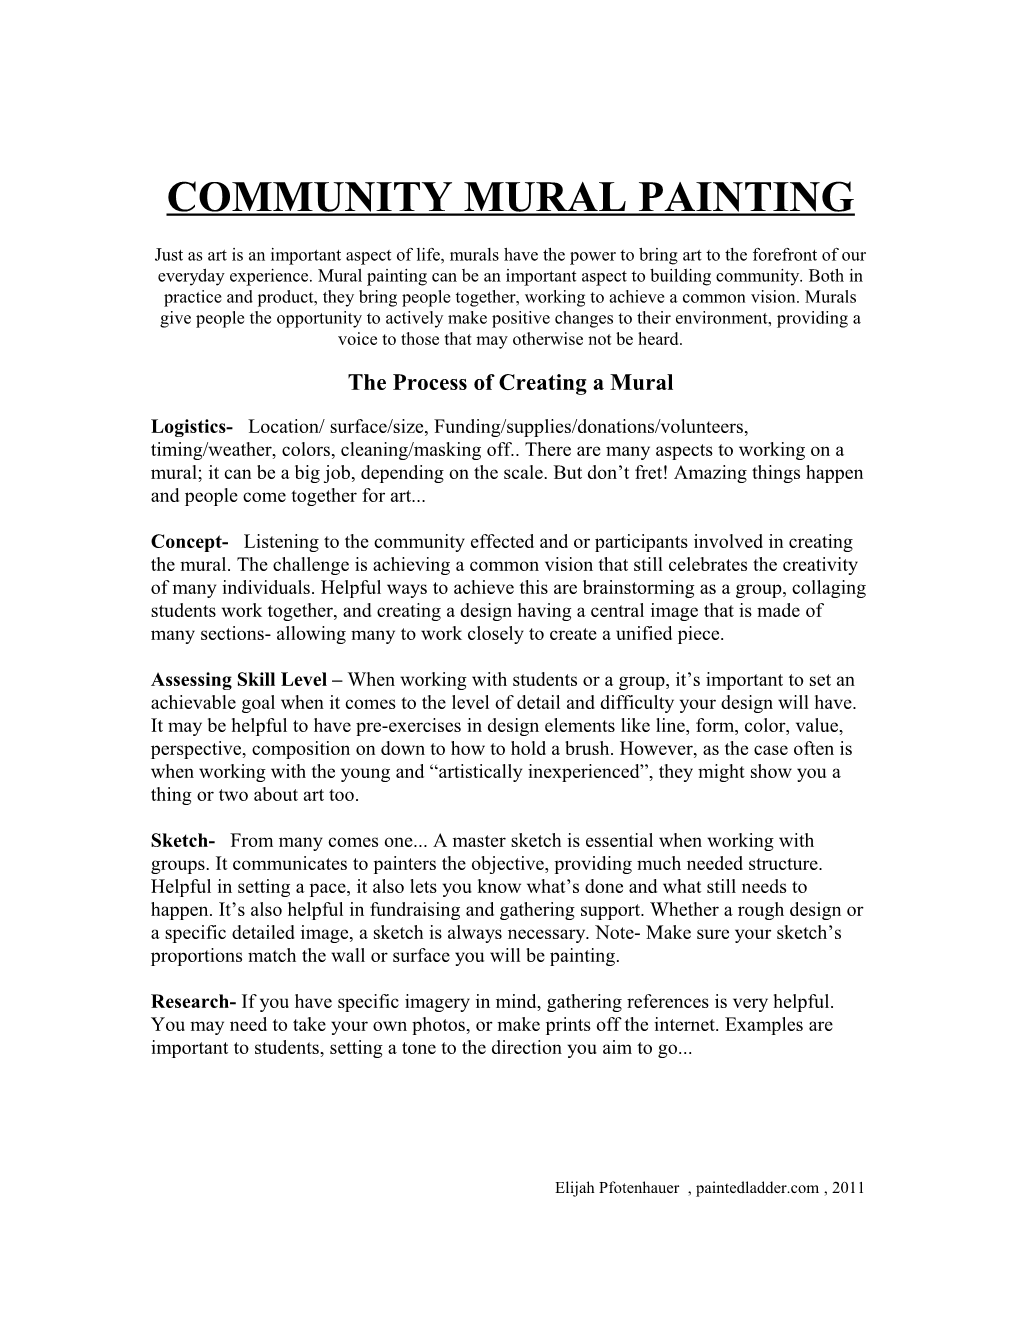 Community Mural Painting